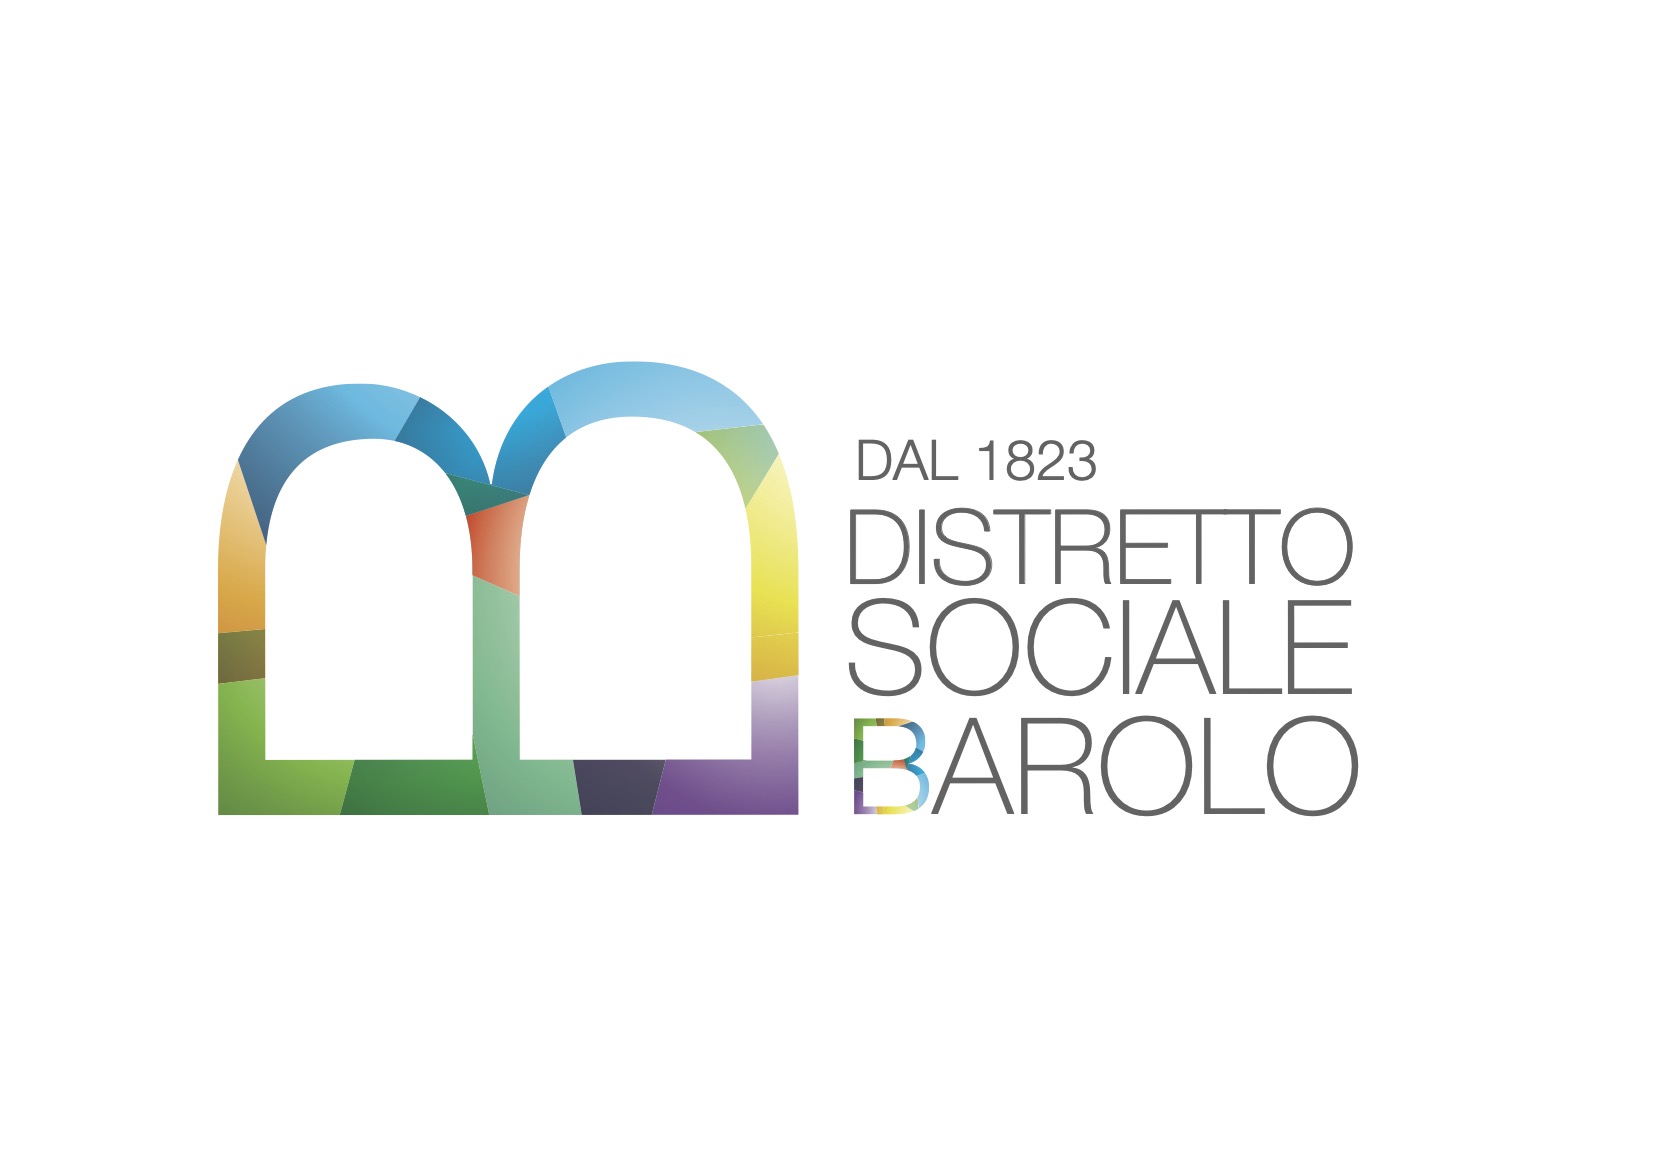 Bicentenario del Distretto Sociale Barolo